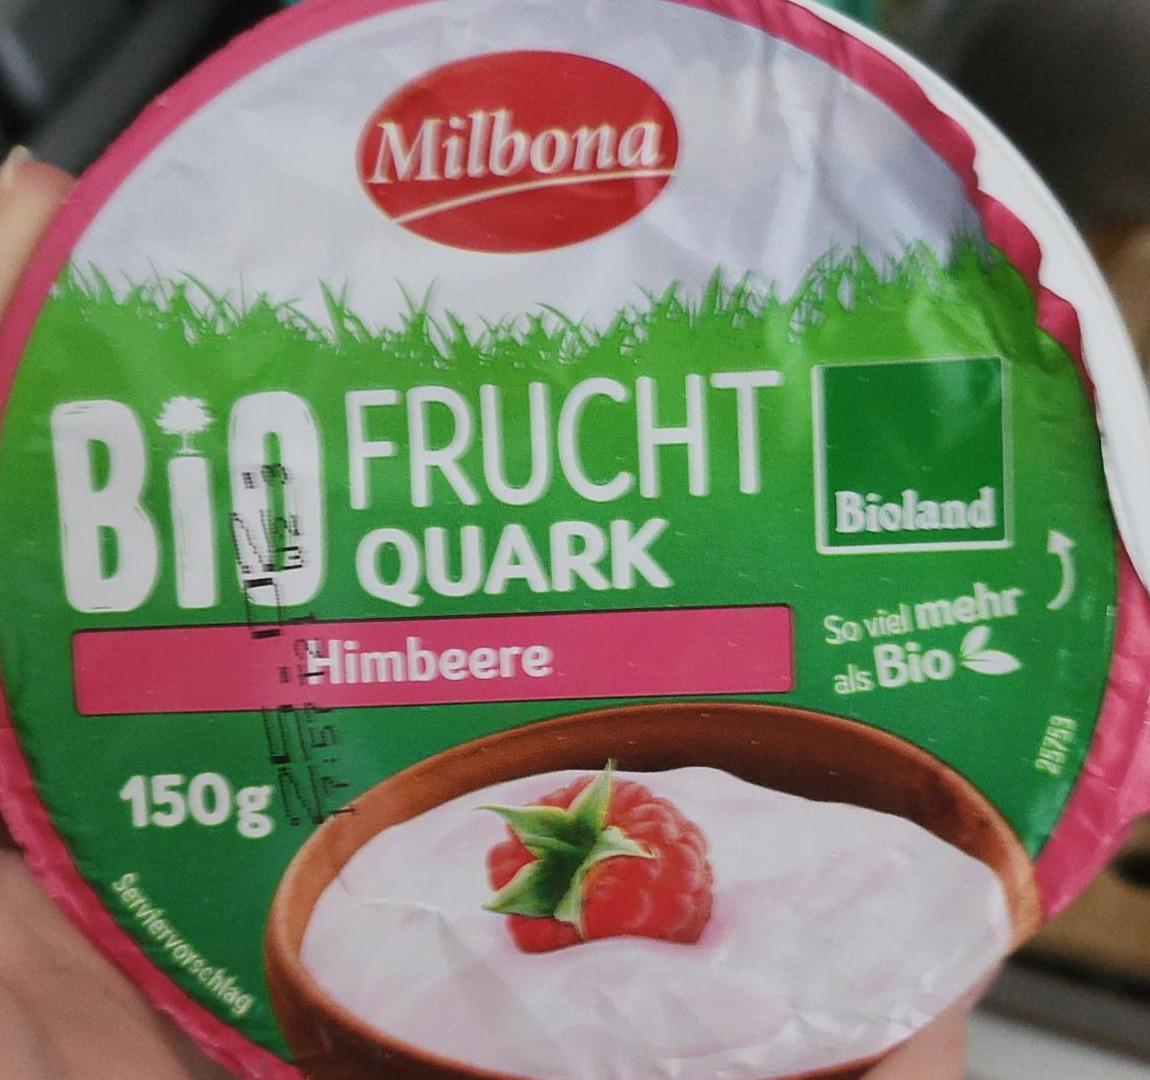 Zdjęcia - bio Frucht quark Himbeere Milbona